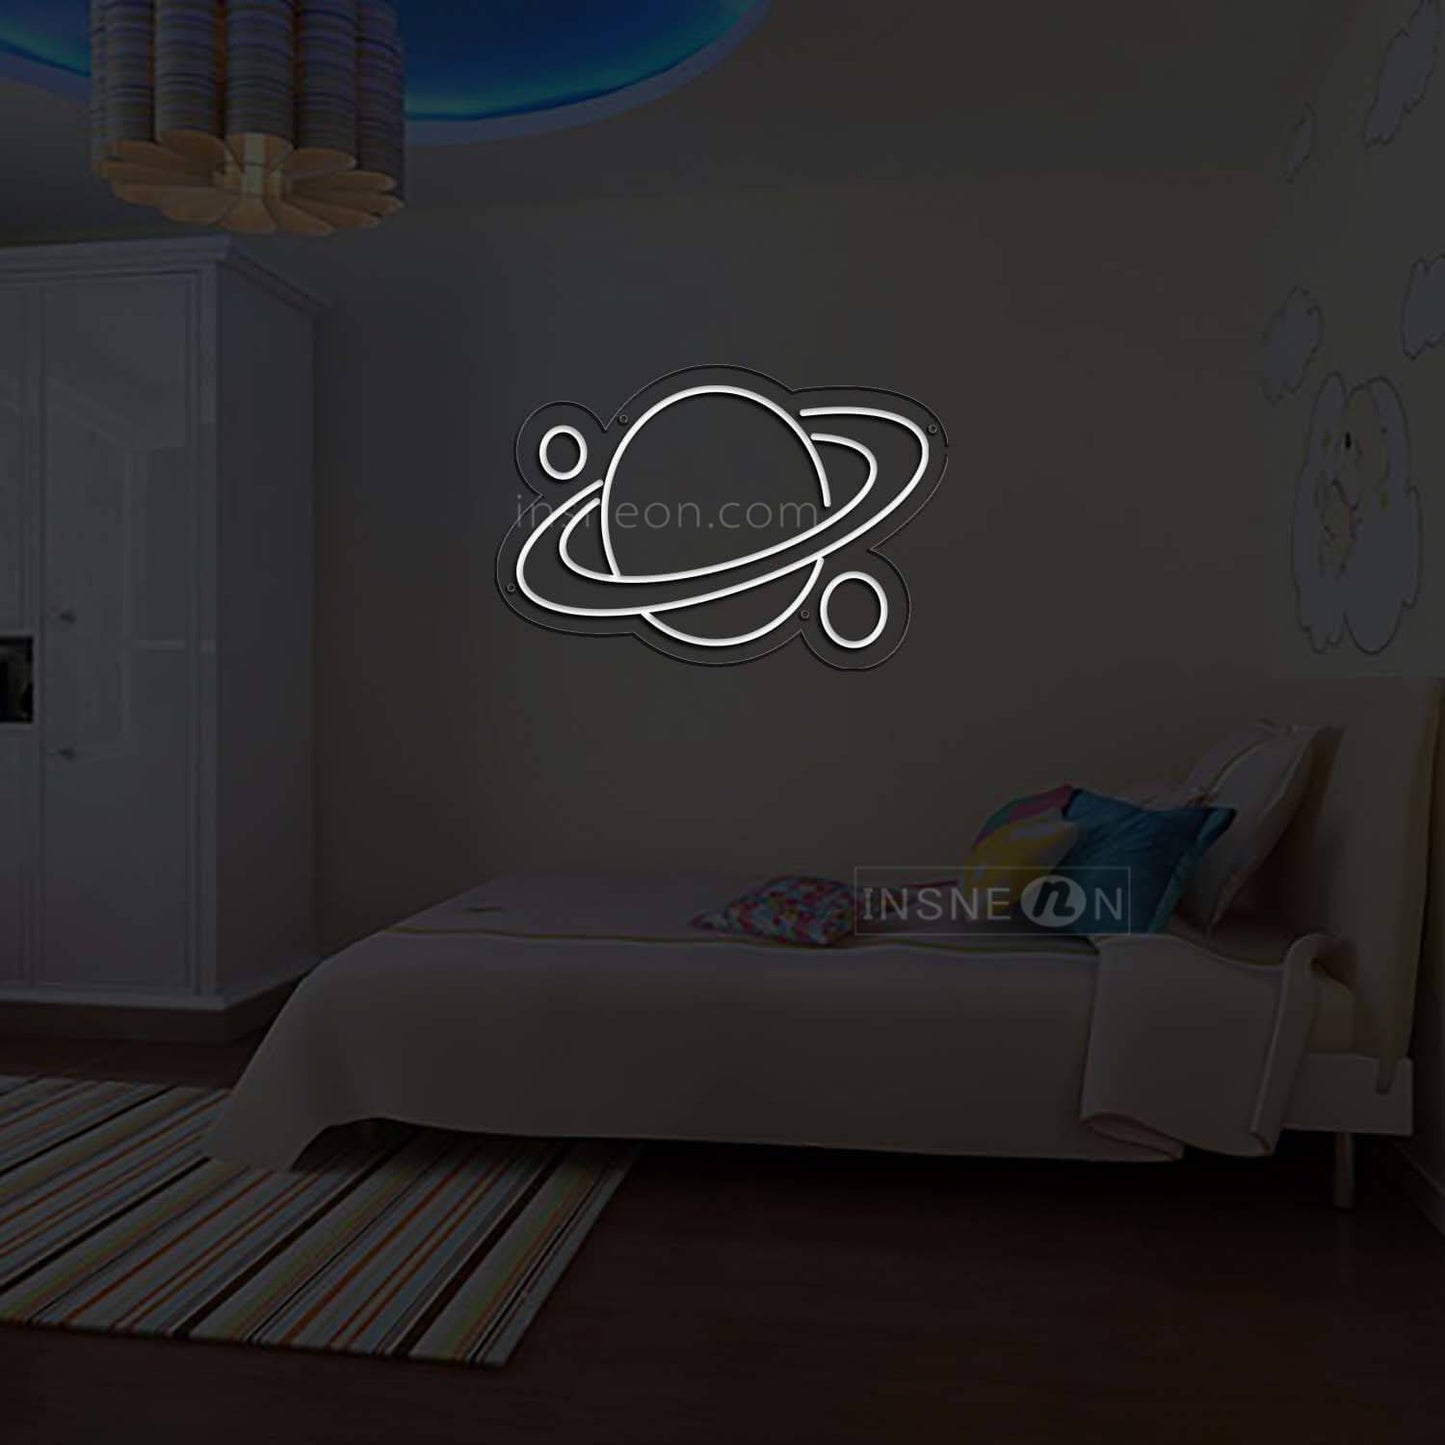 Planetary Lamp Led Custom Neon Sign